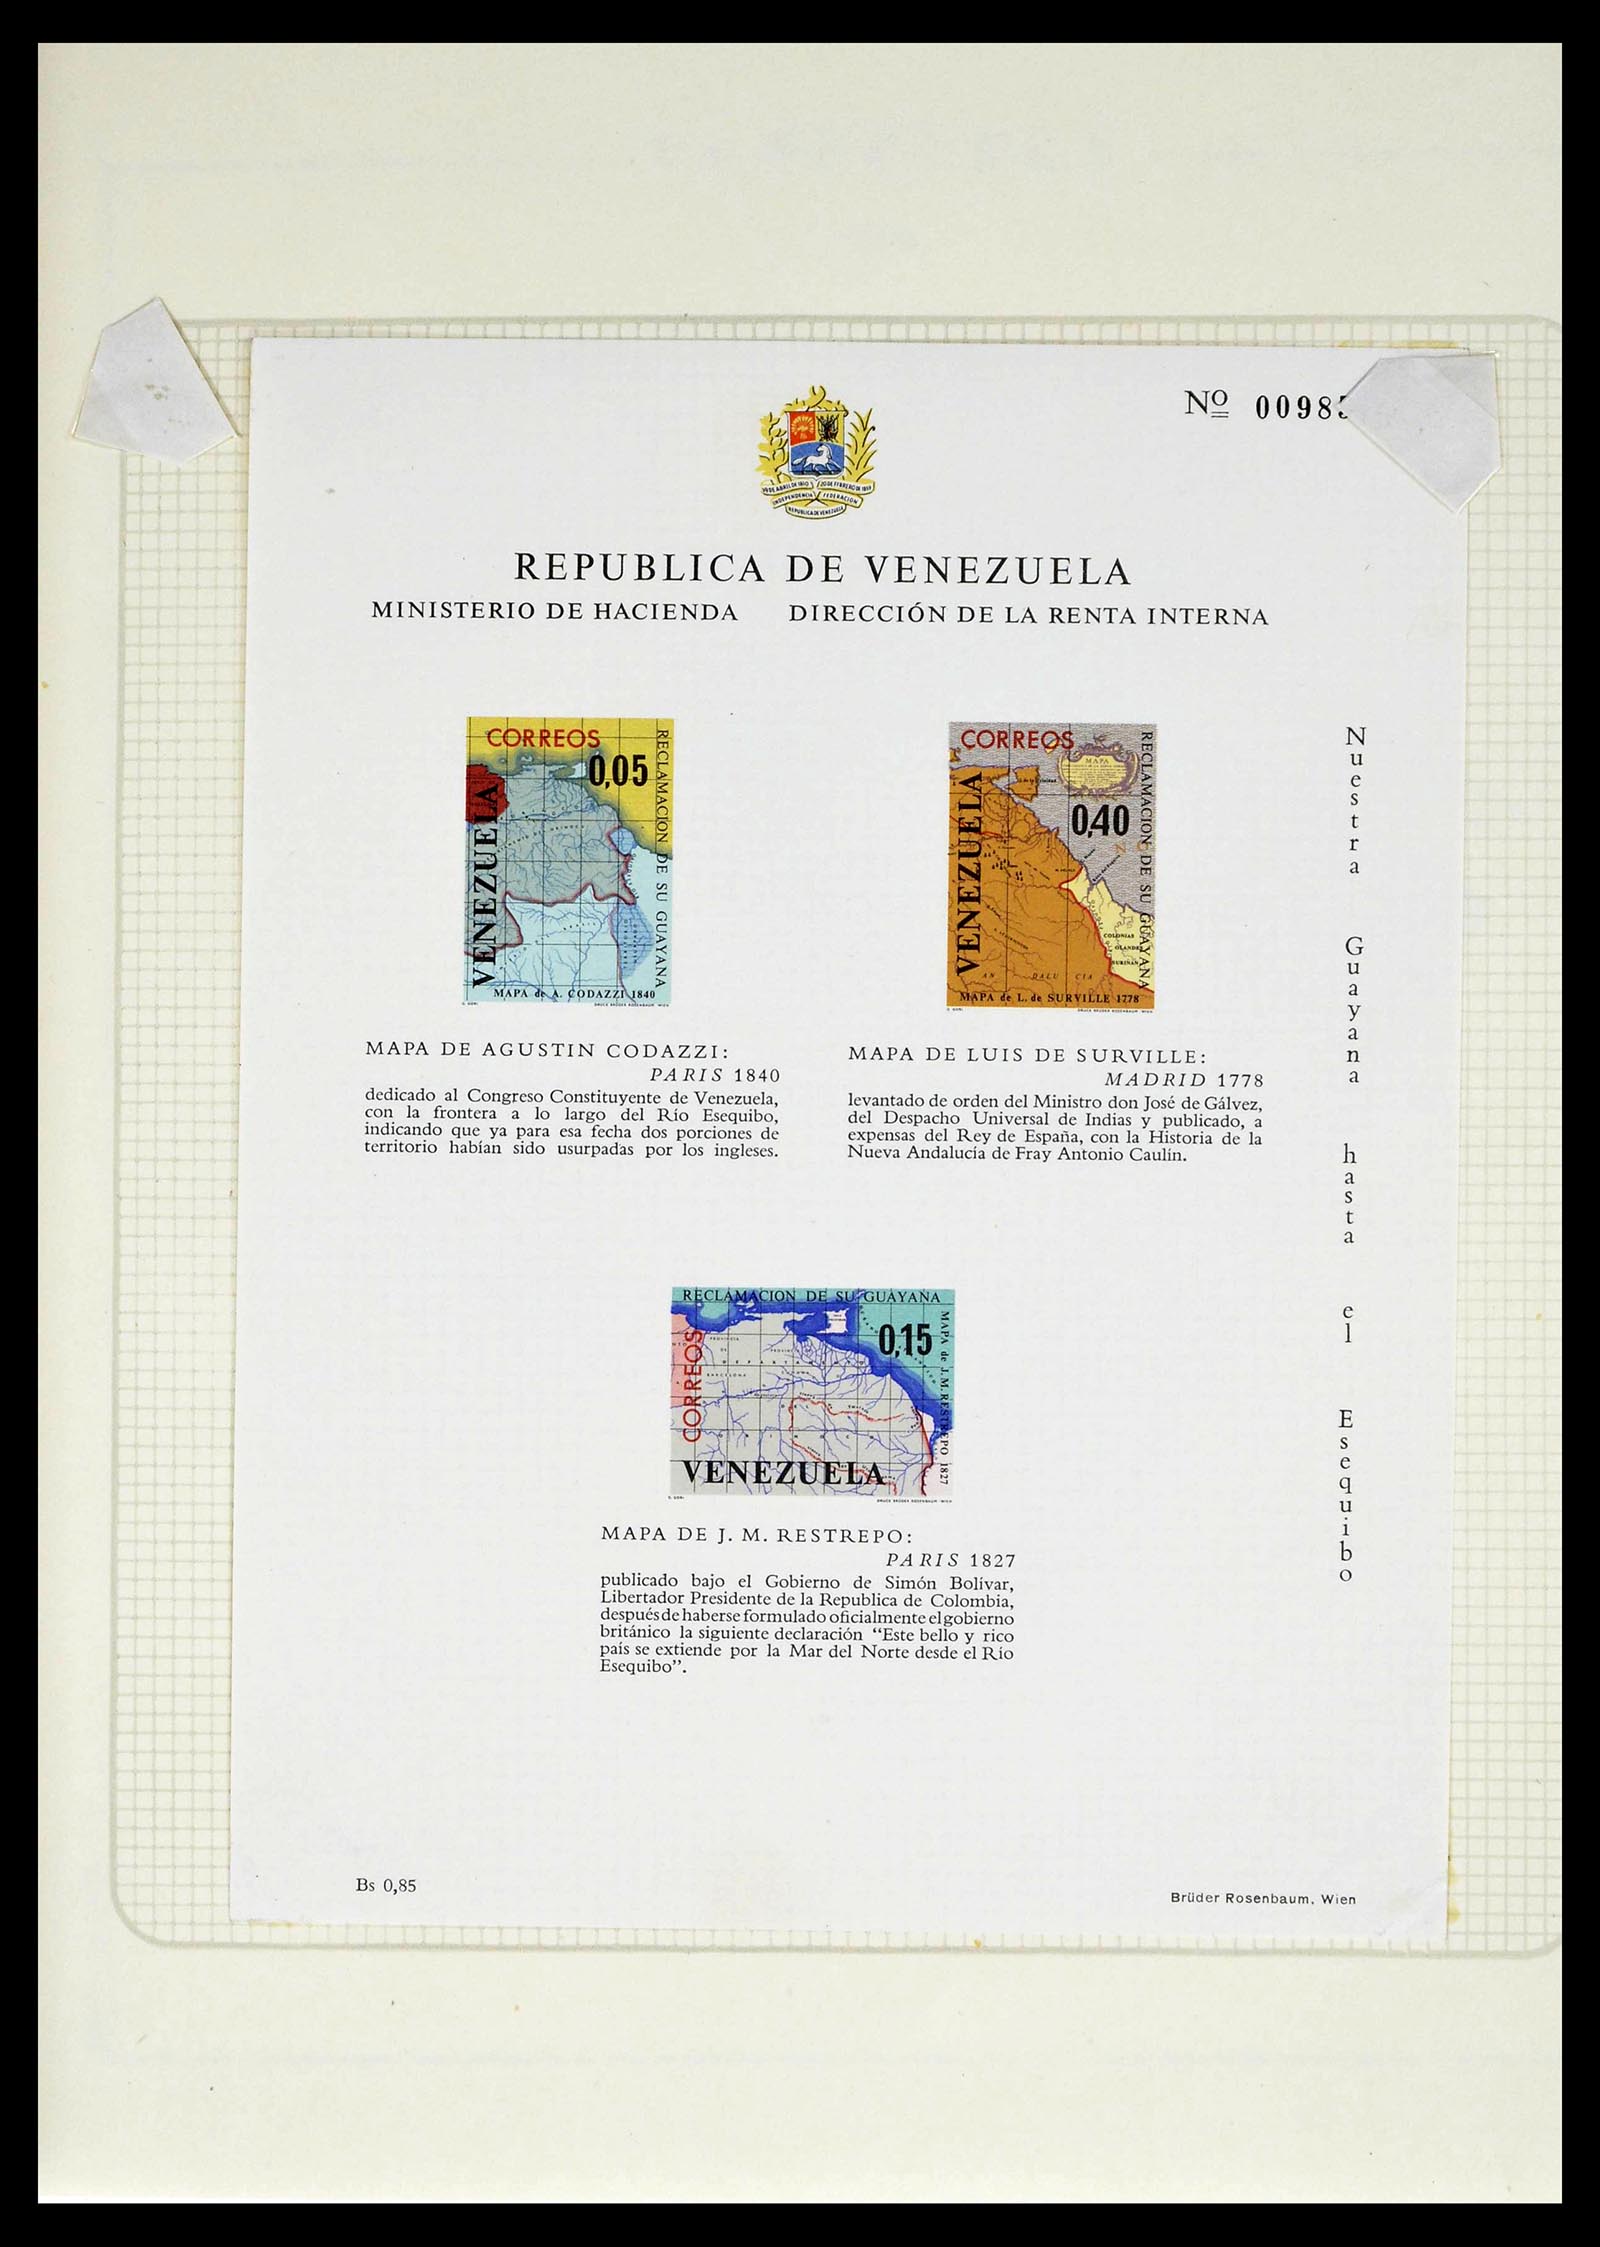 39223 0178 - Stamp collection 39223 Venezuela 1859-1984.